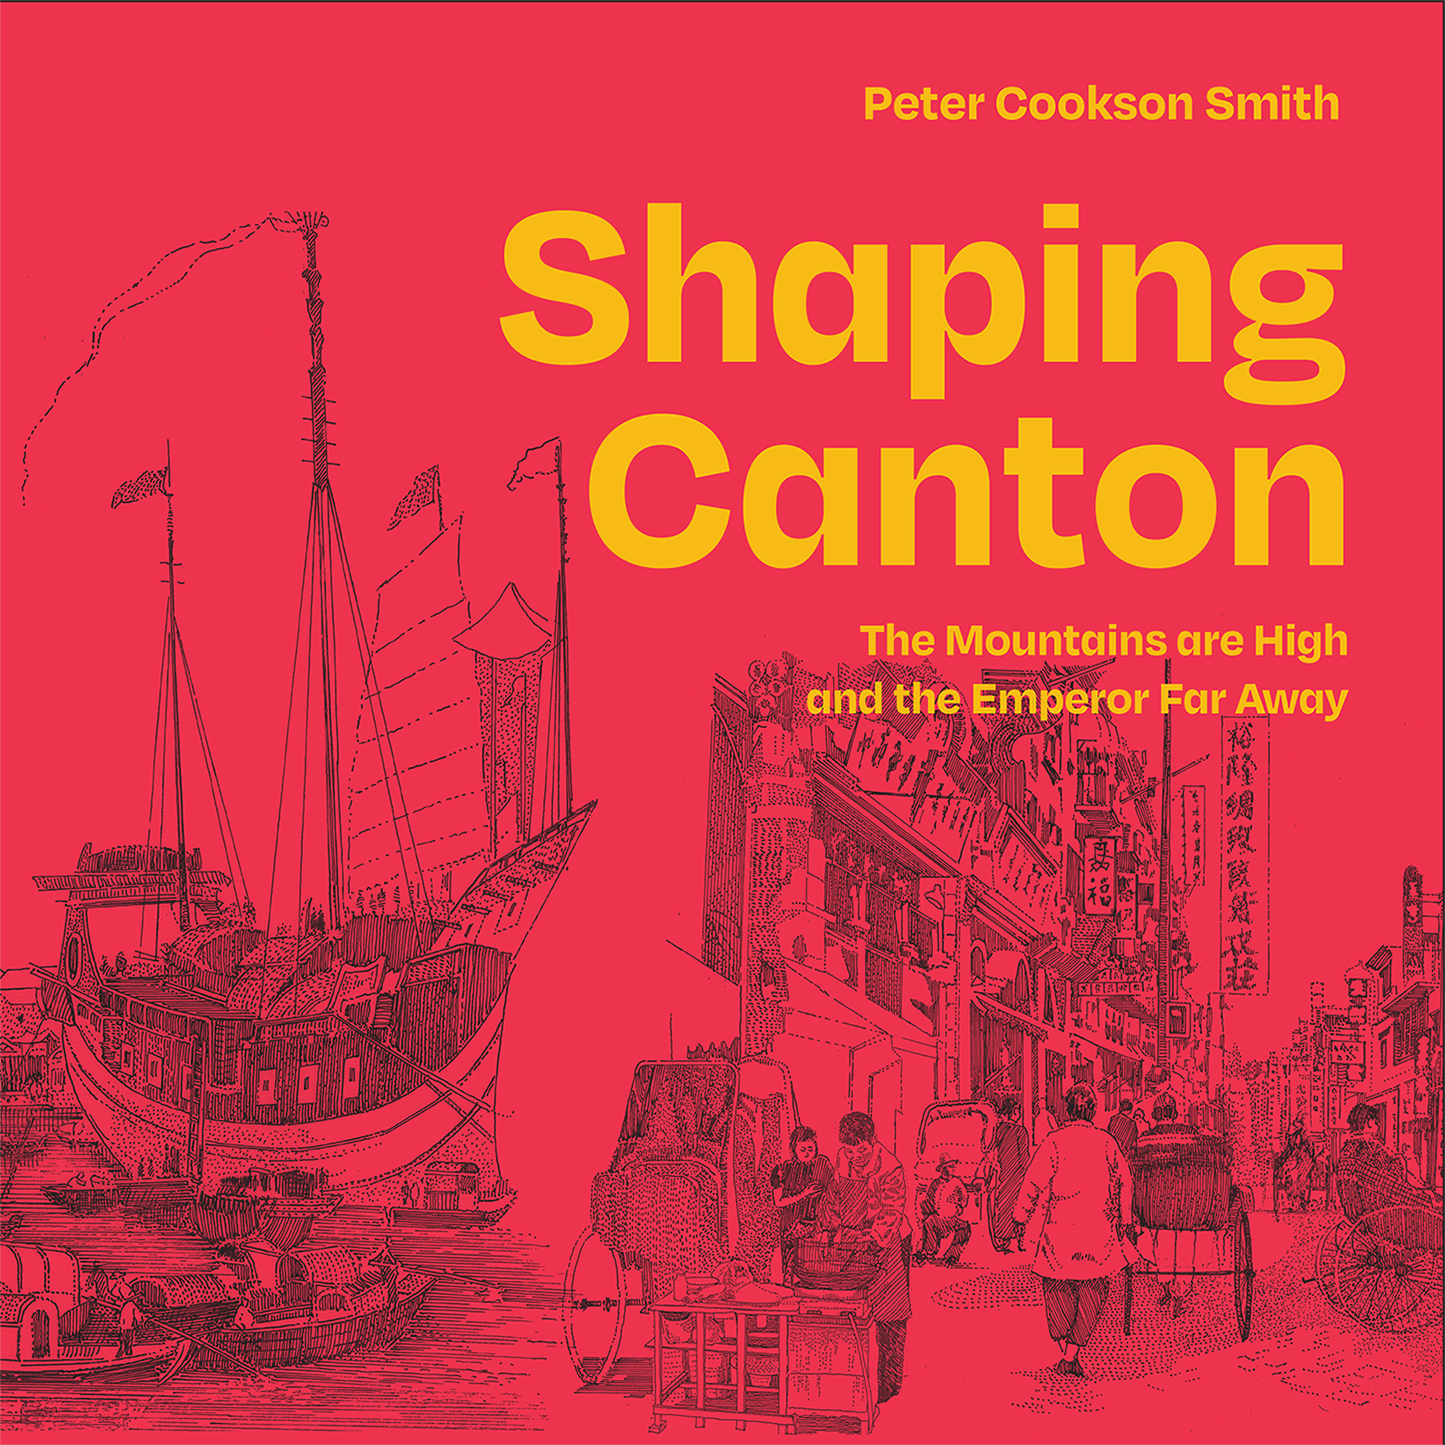 Shaping-canton-copy